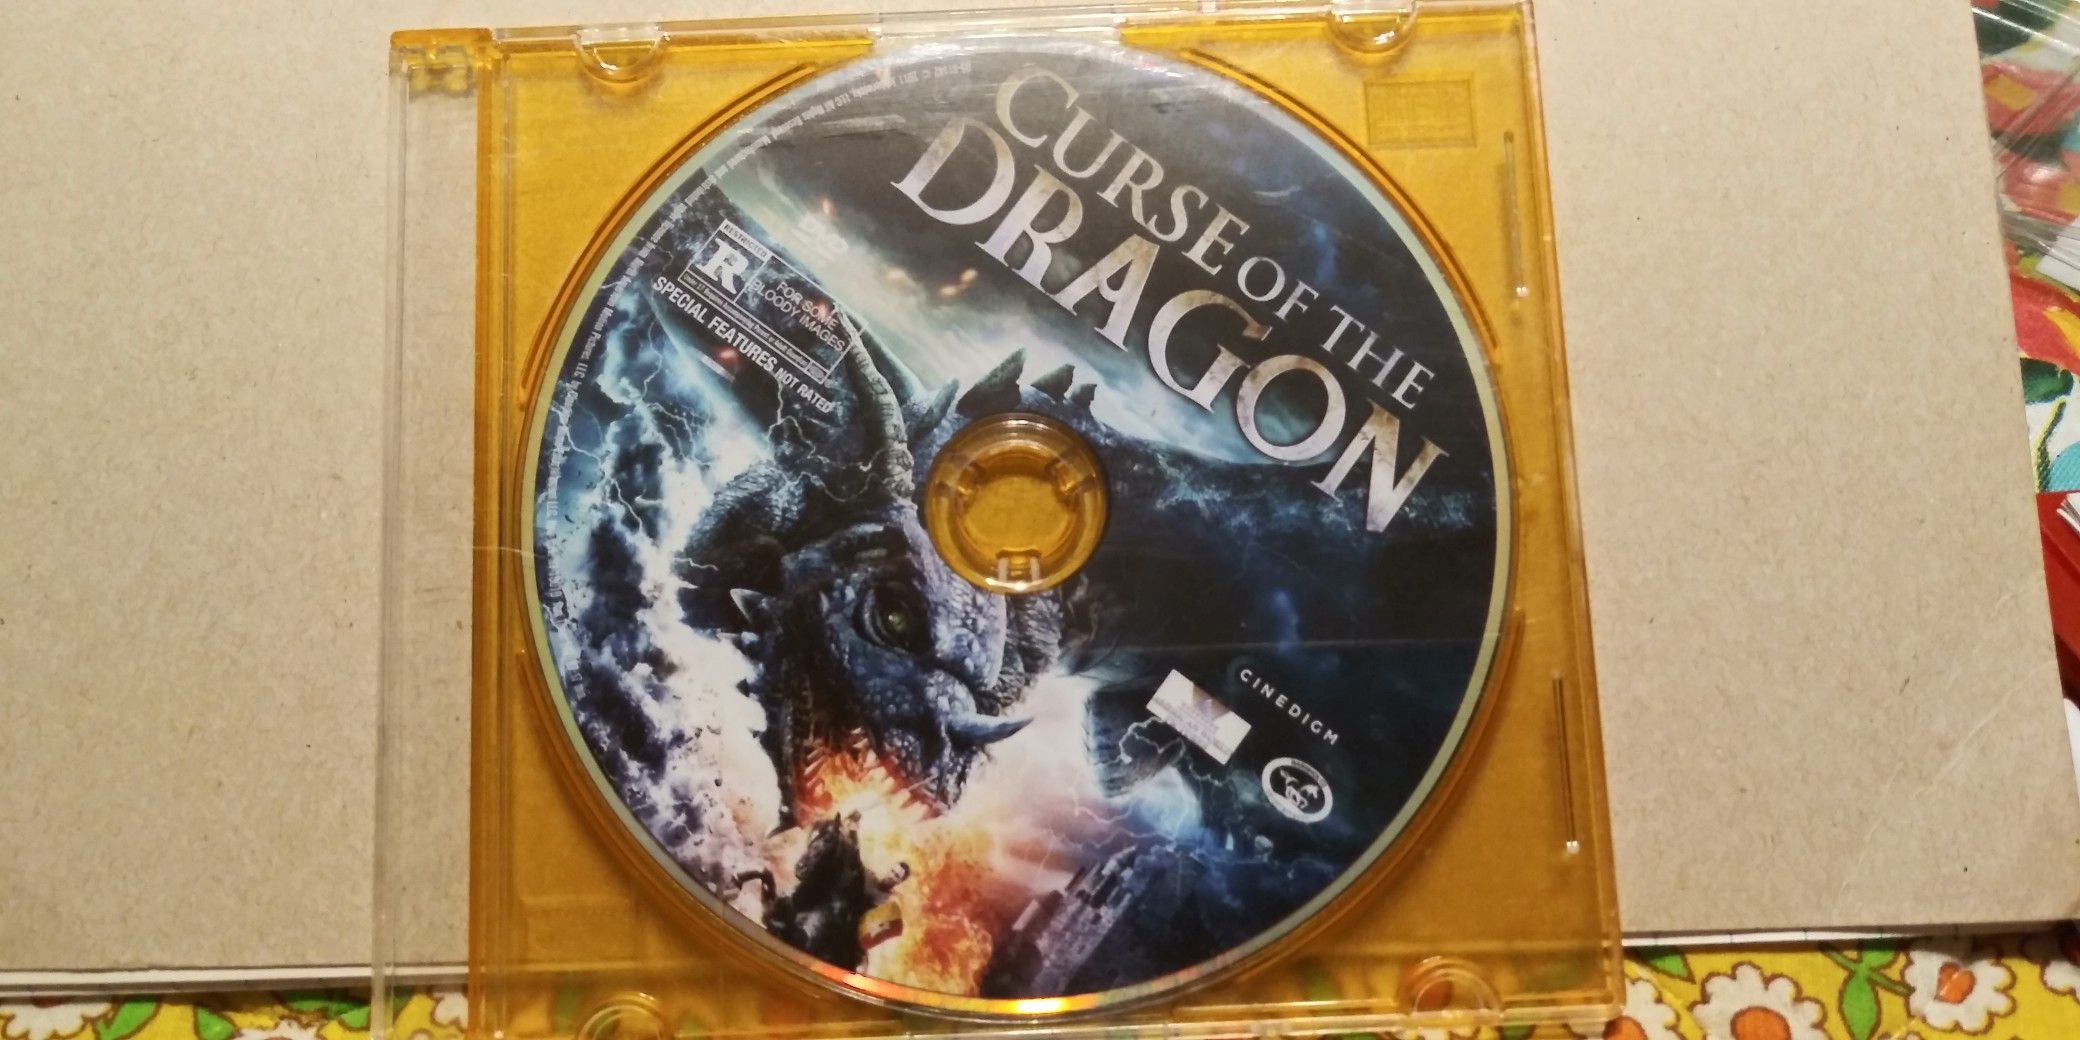 Curse of the Dragon dvd